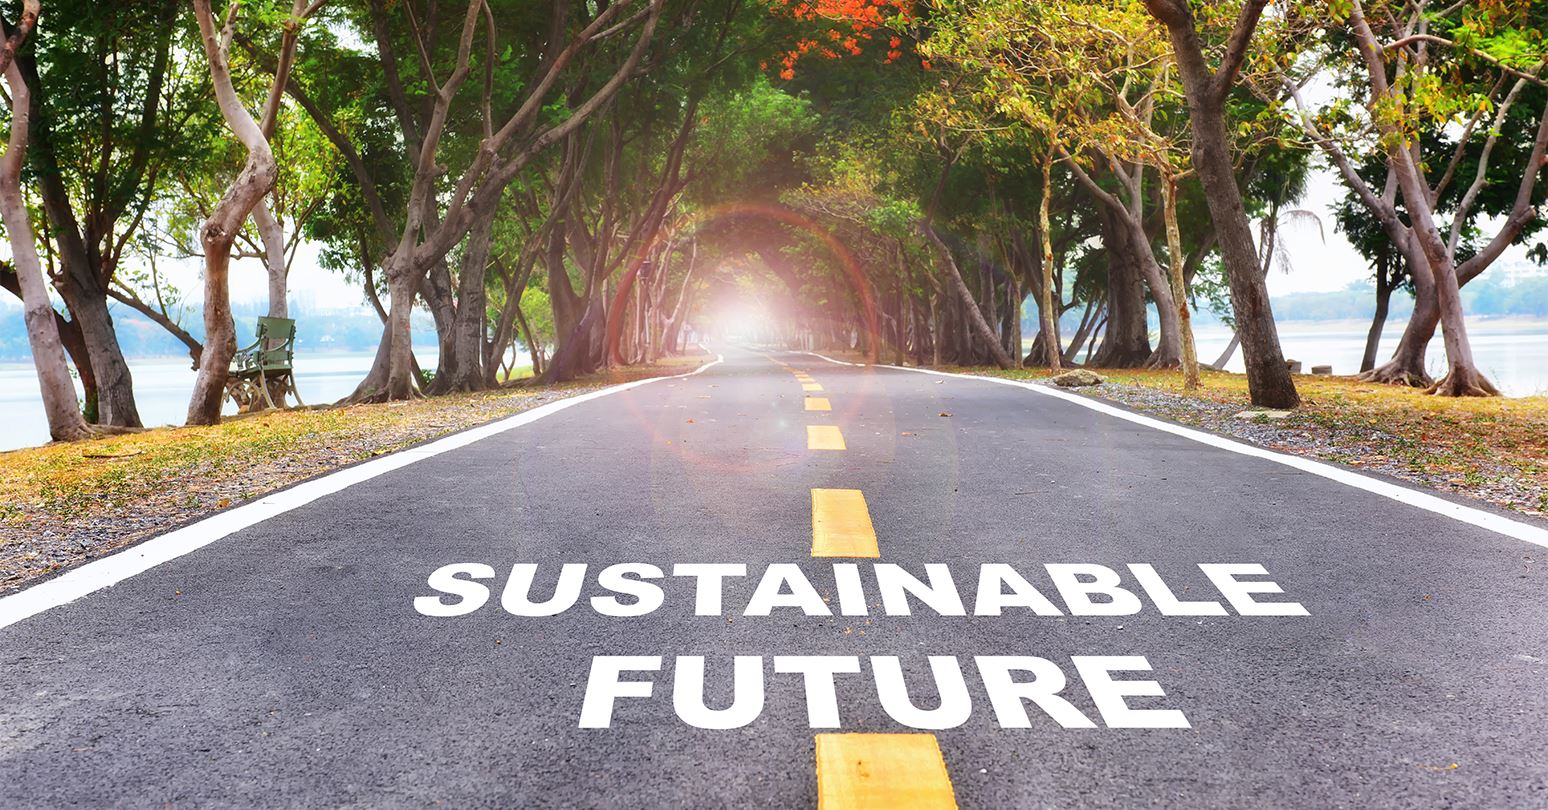 Sustainable Future written on road leading through trees